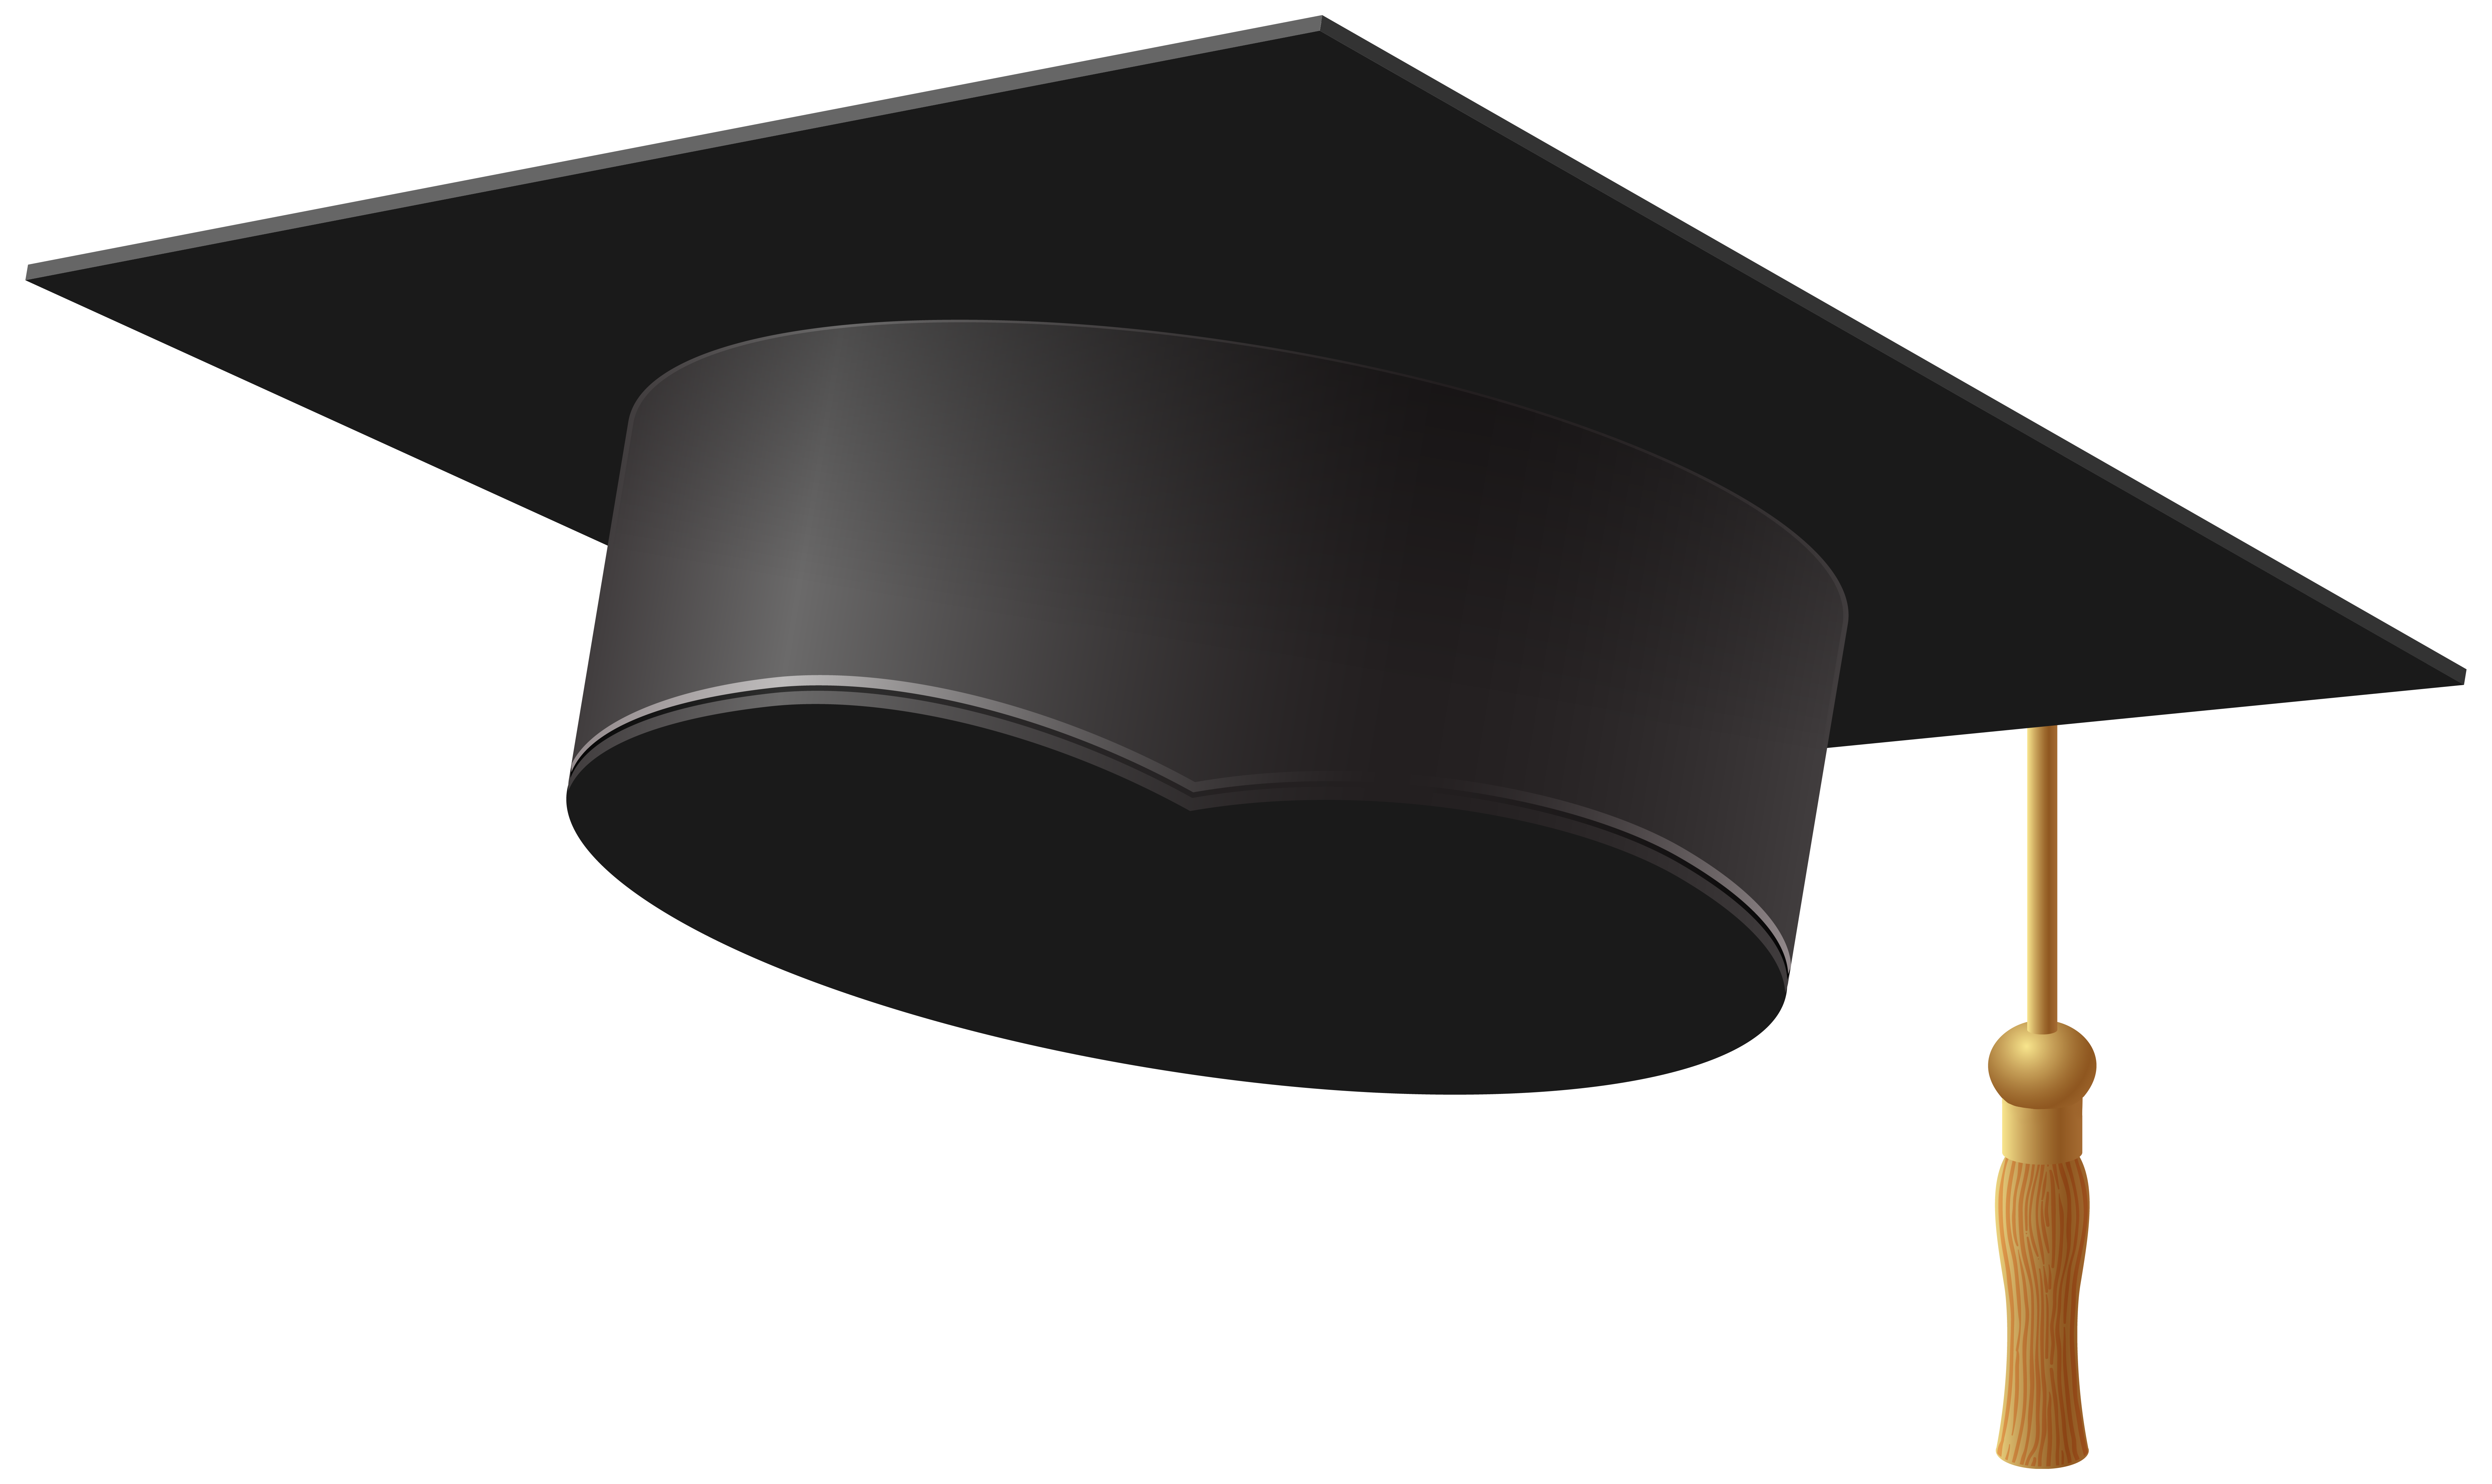 Clipart for graduation cap; G